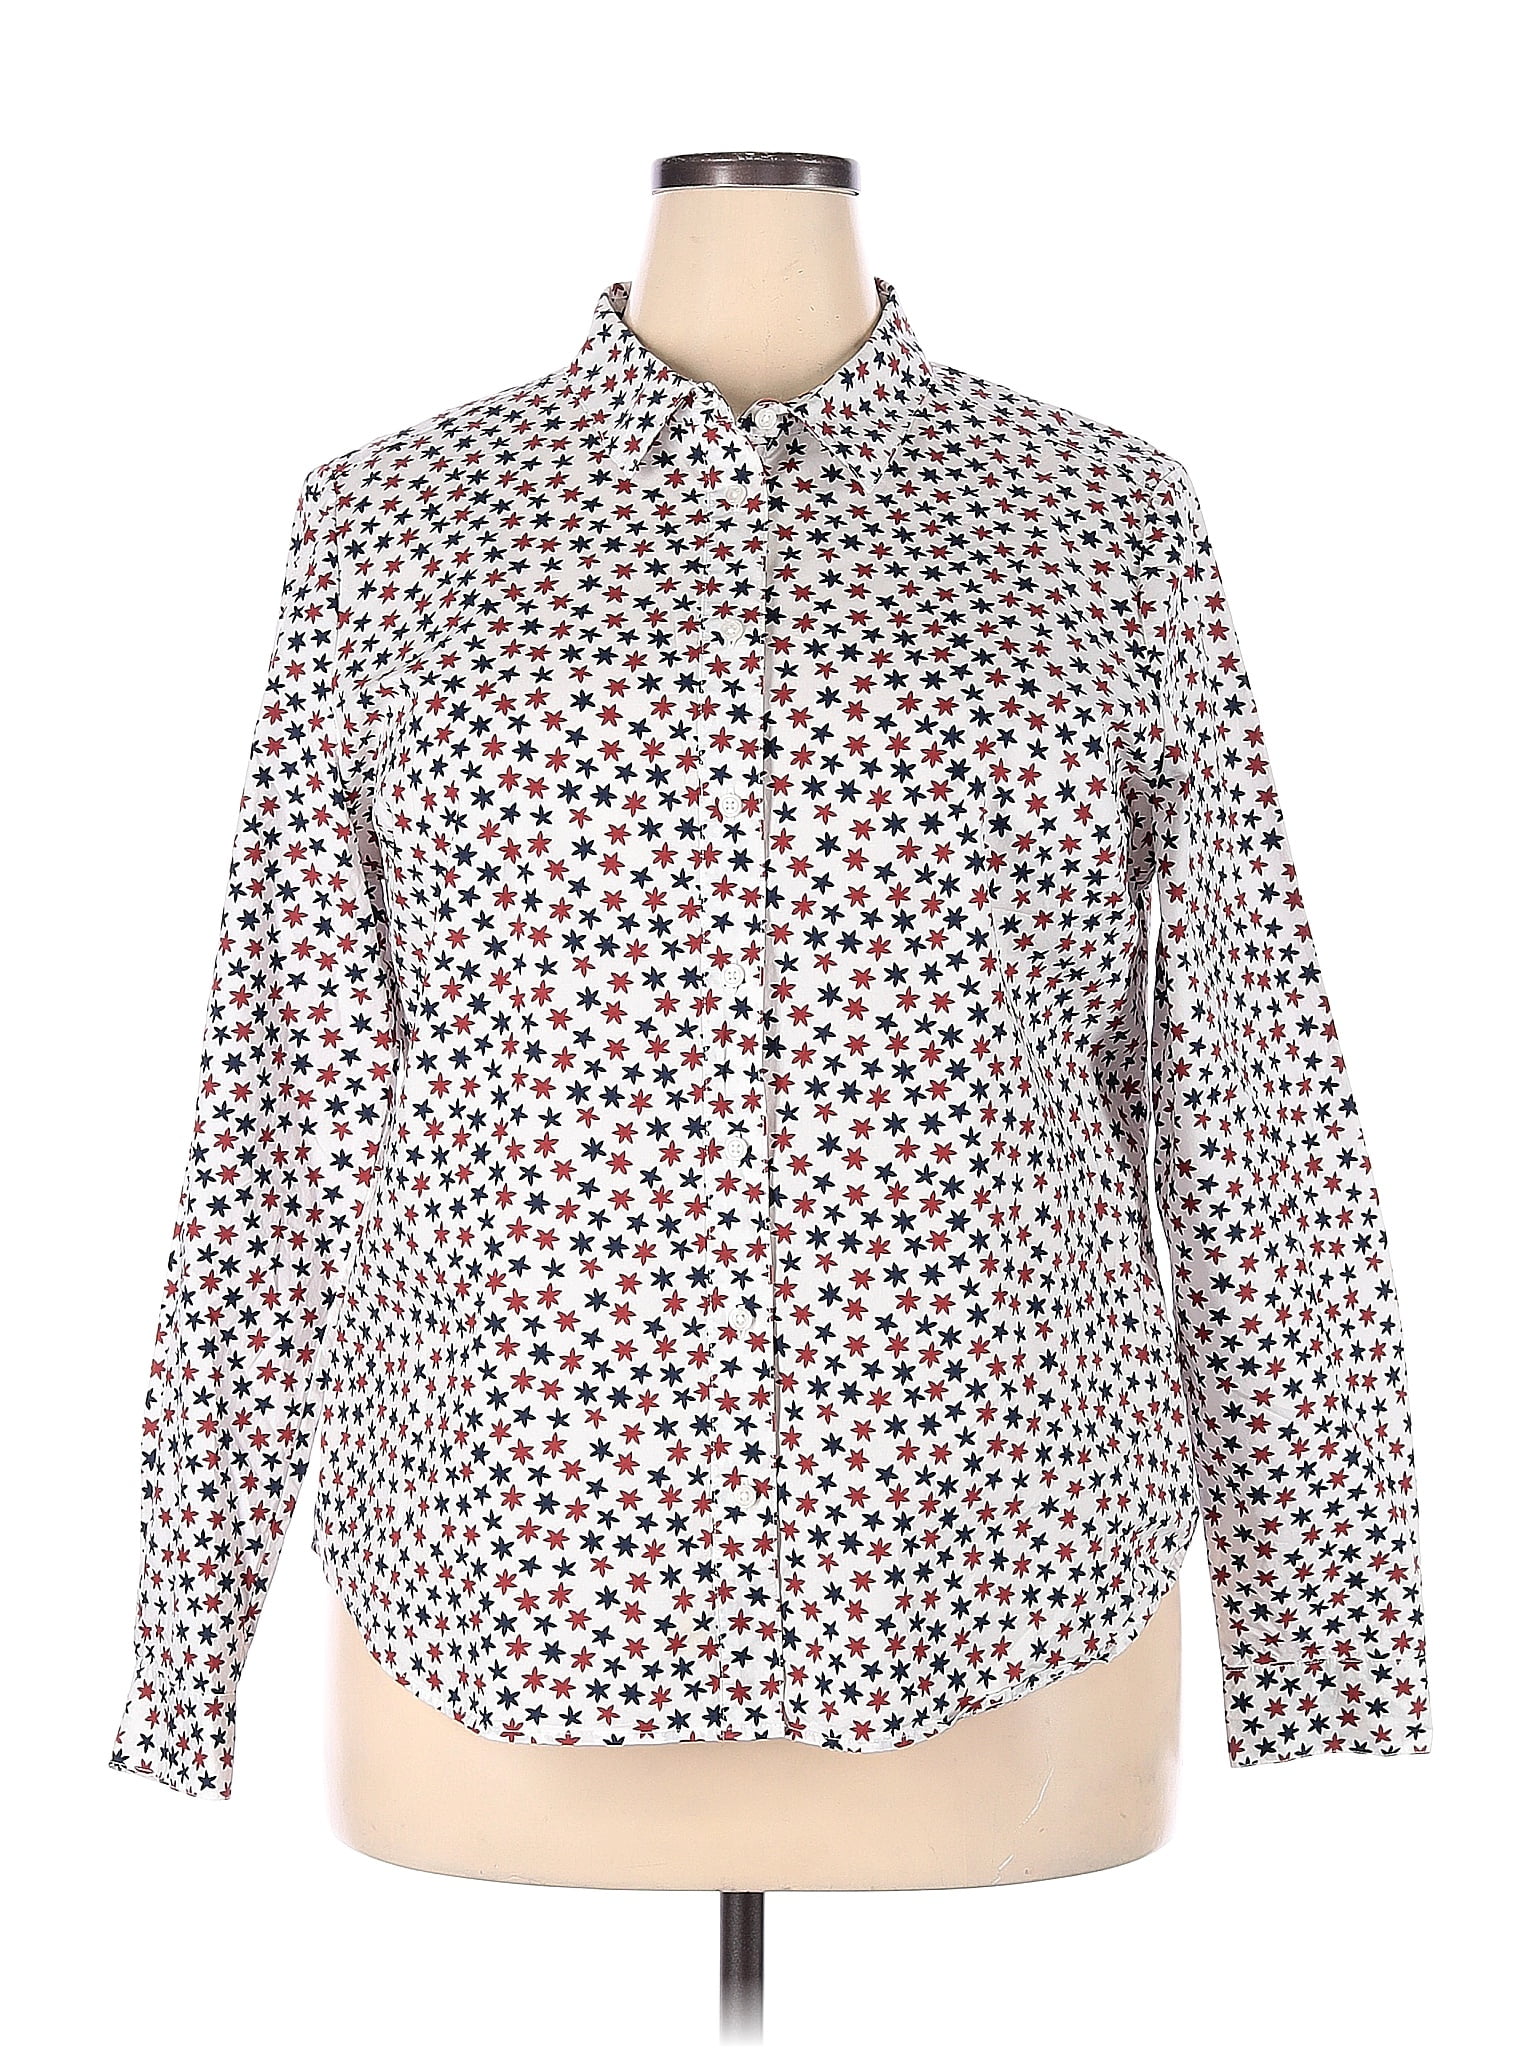 Boden 100% Cotton Polka Dots White Long Sleeve Button-Down Shirt Size ...